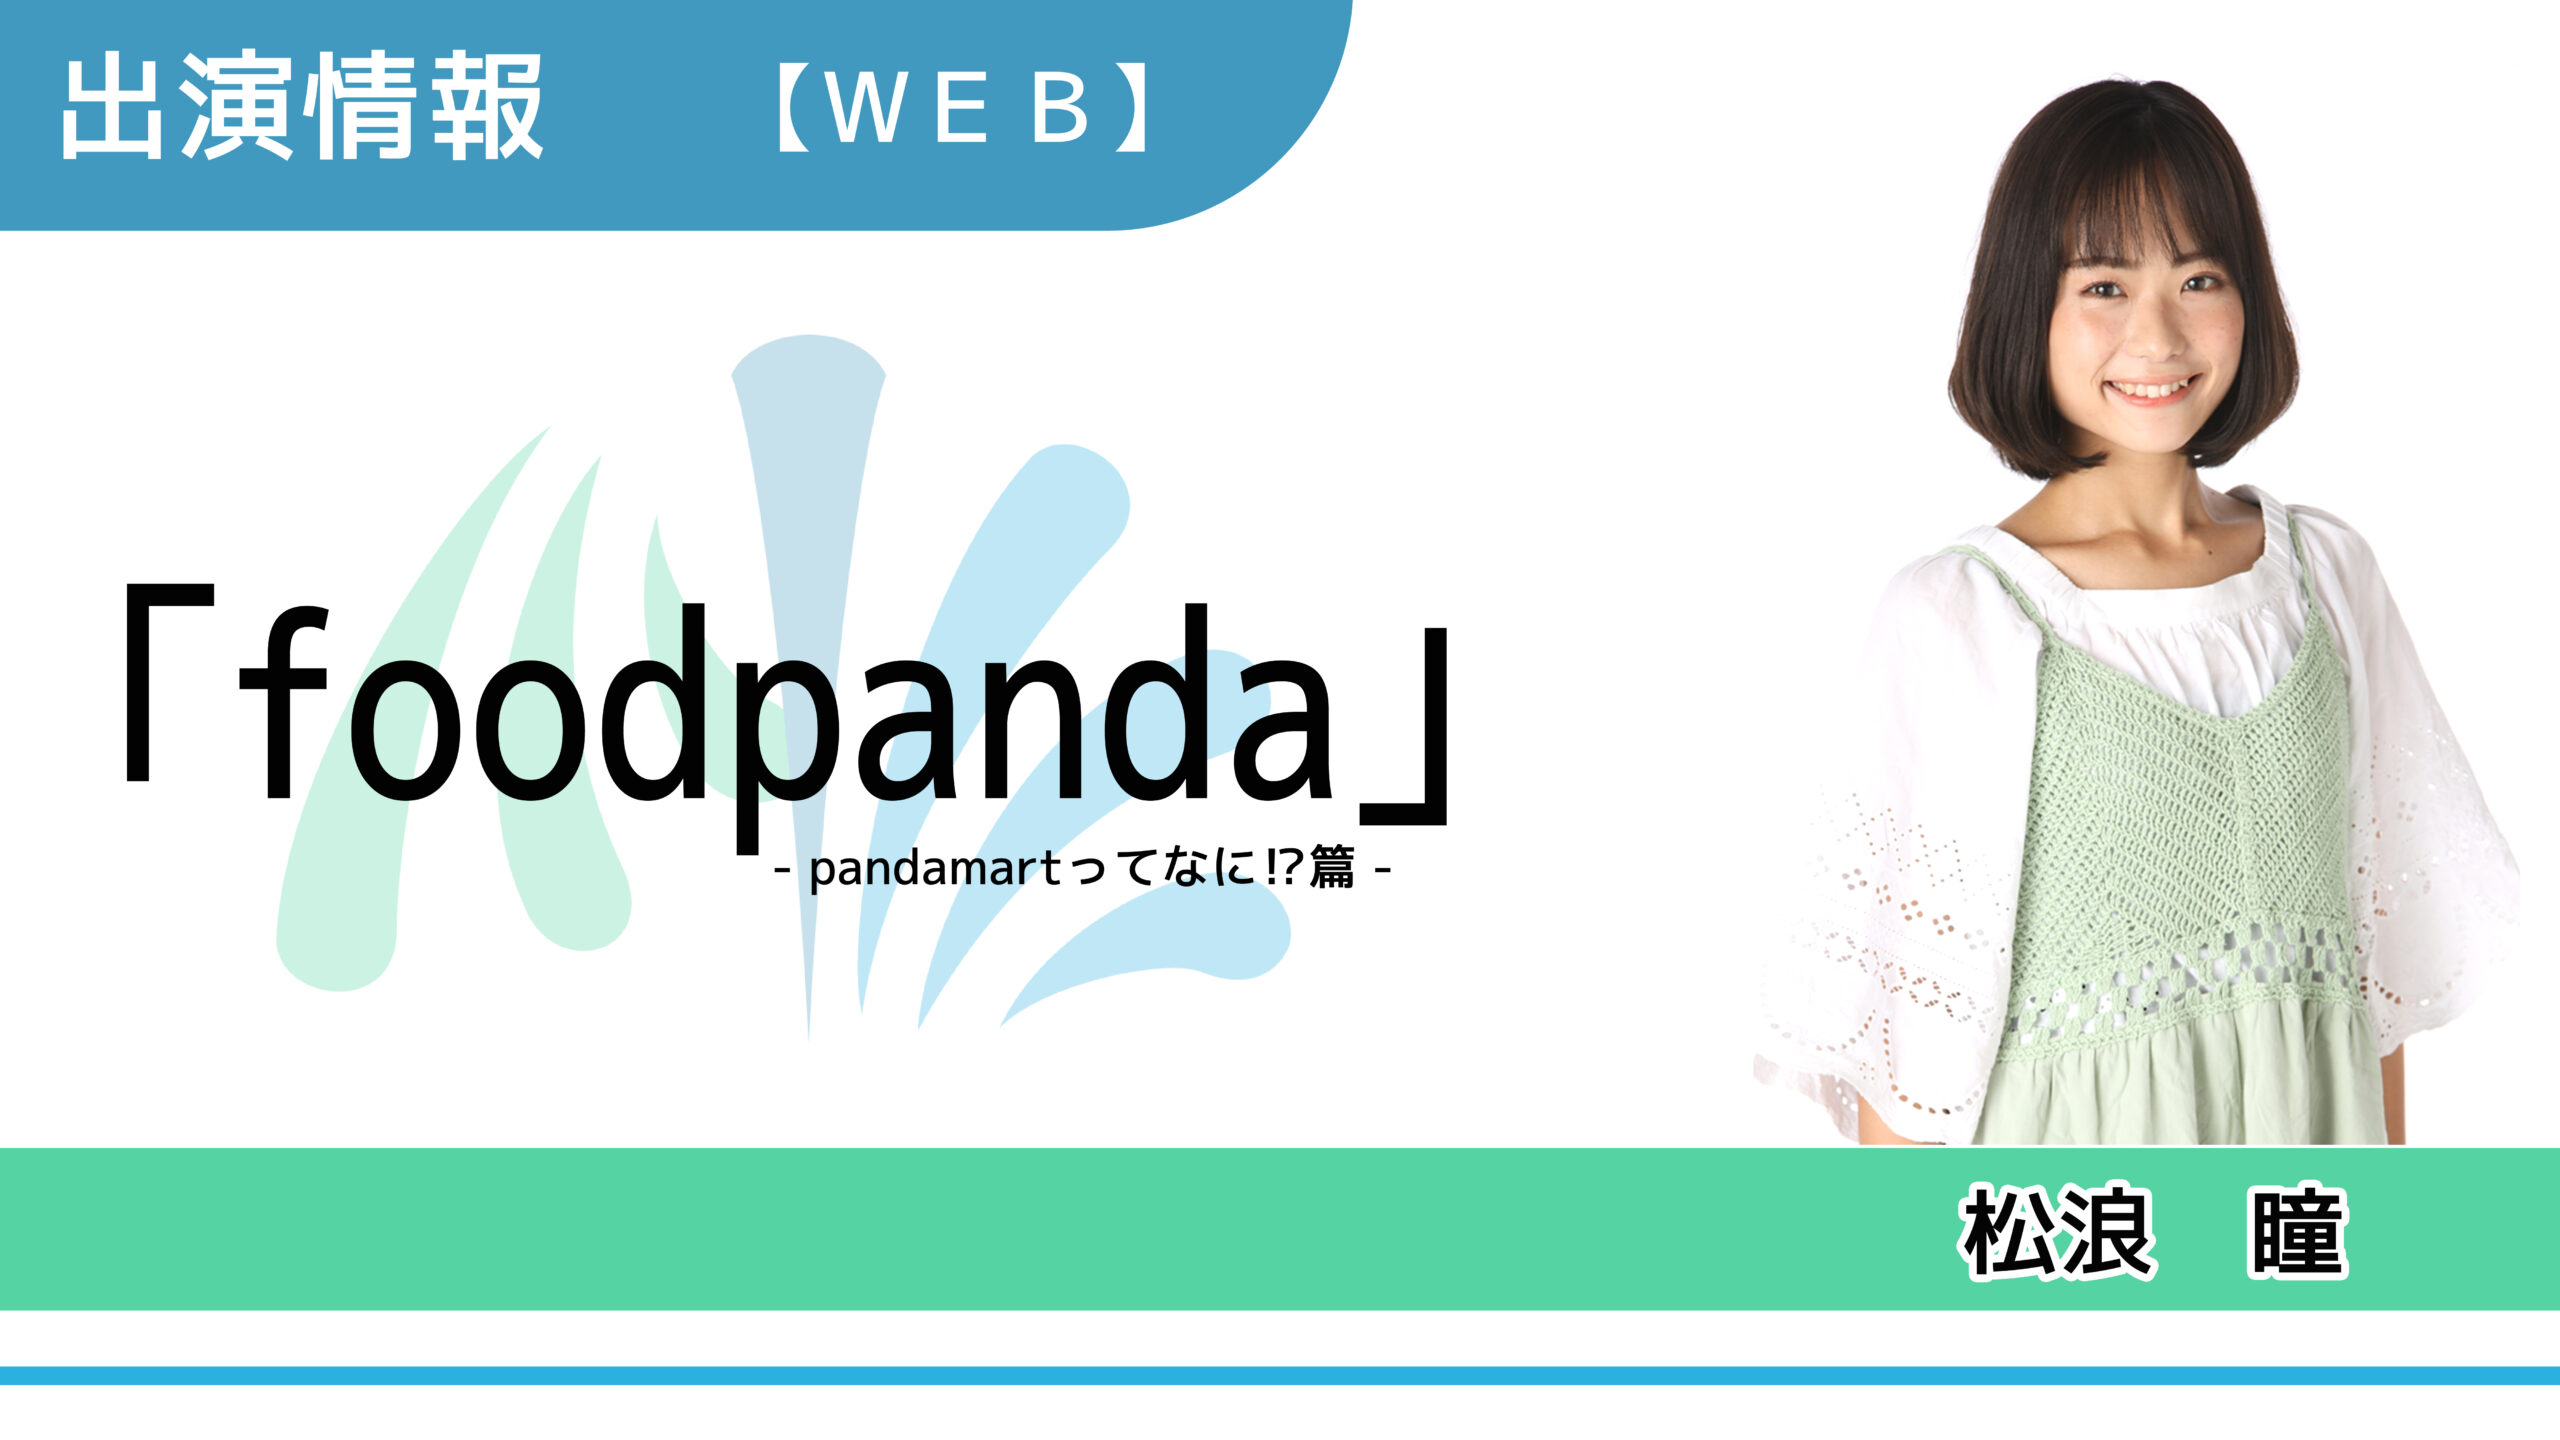 【出演情報】松浪瞳 / 「foodpanda」WEBムービー出演